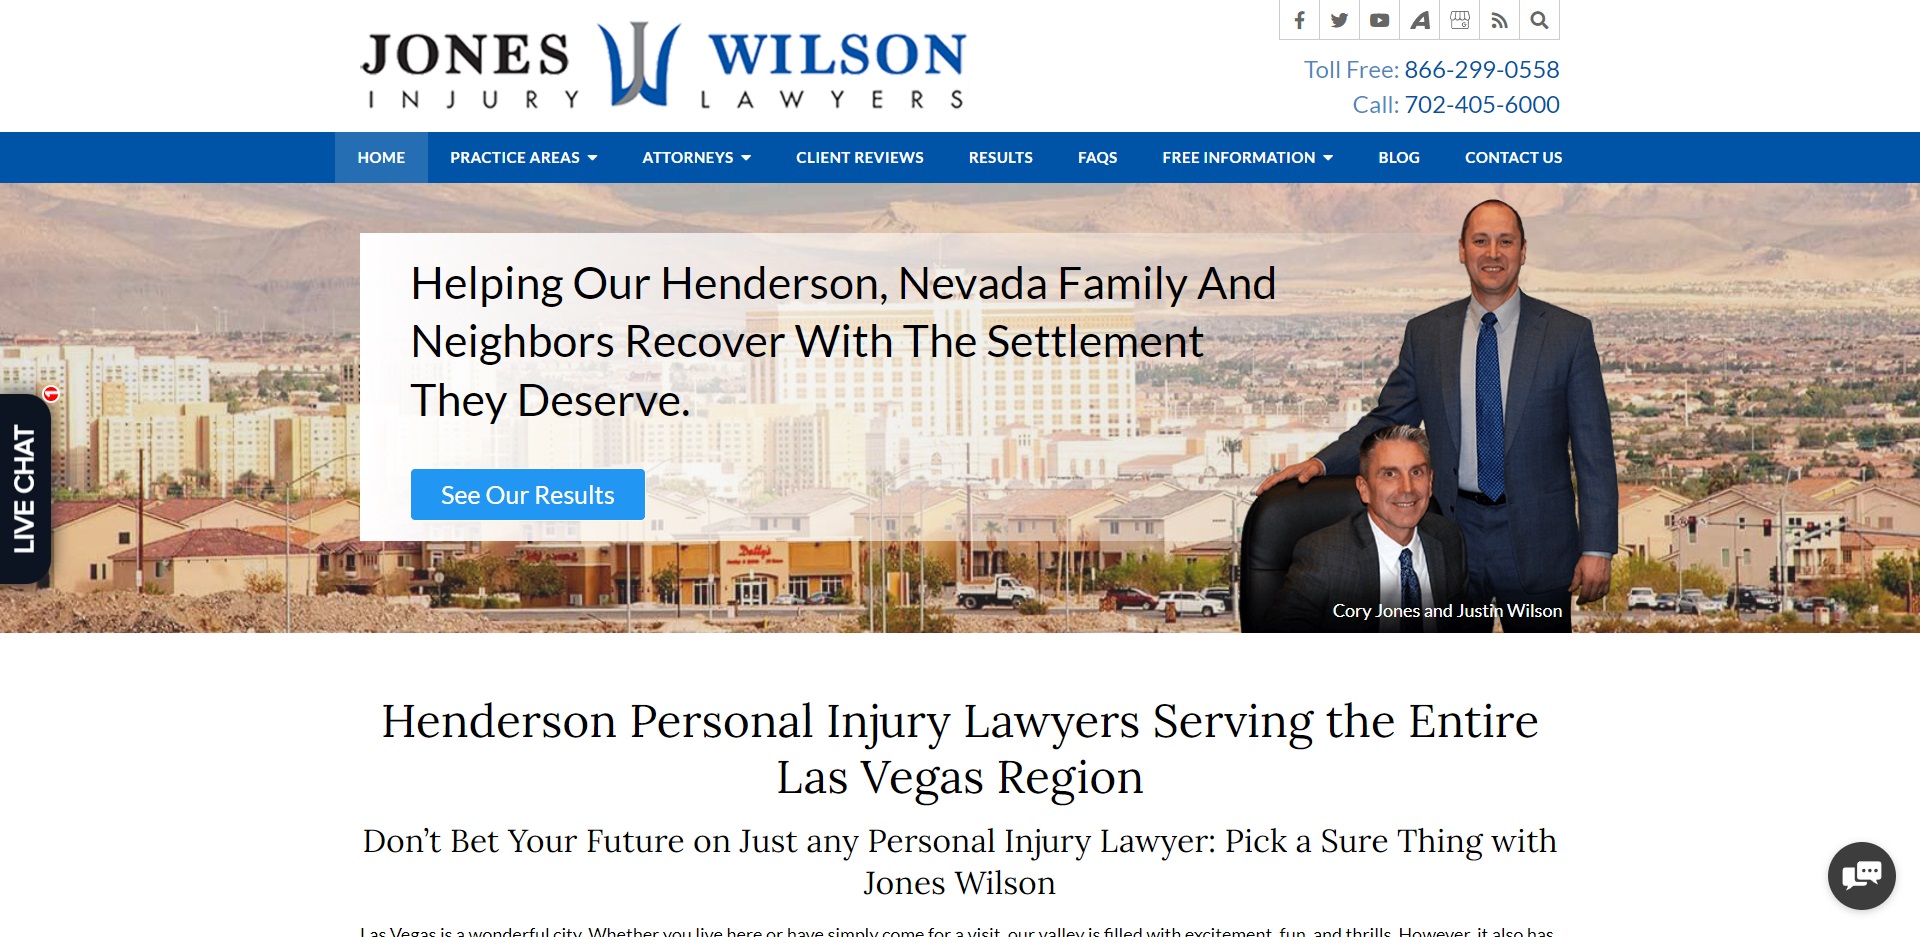 5 Best Personal Injury Attorneys in Henderson, NV